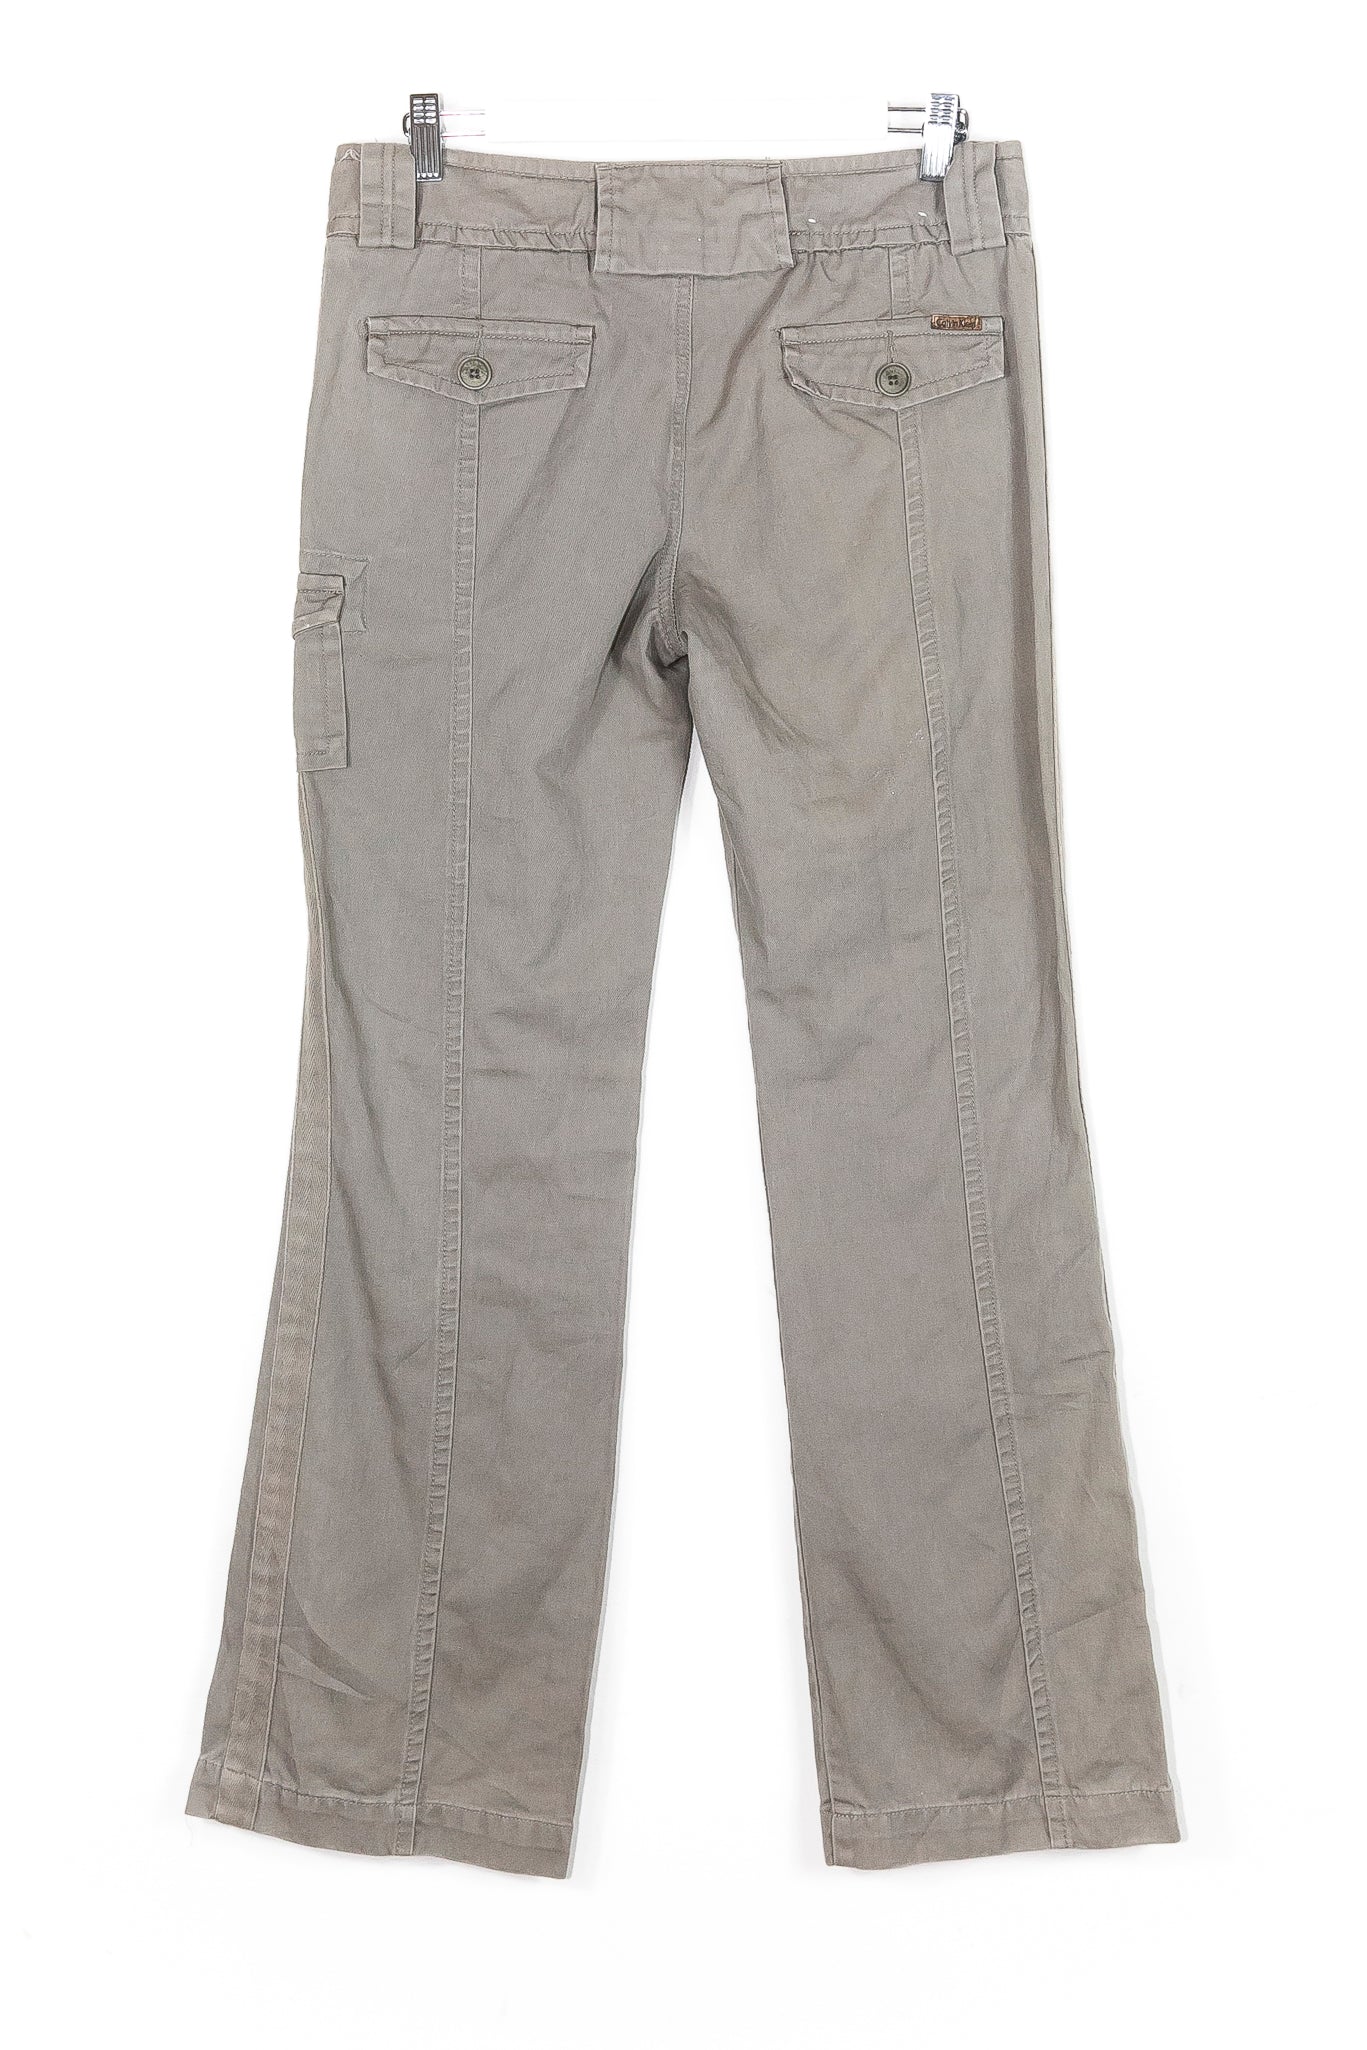 Vintage Storeroom Merch Cargo Pants (30/12)